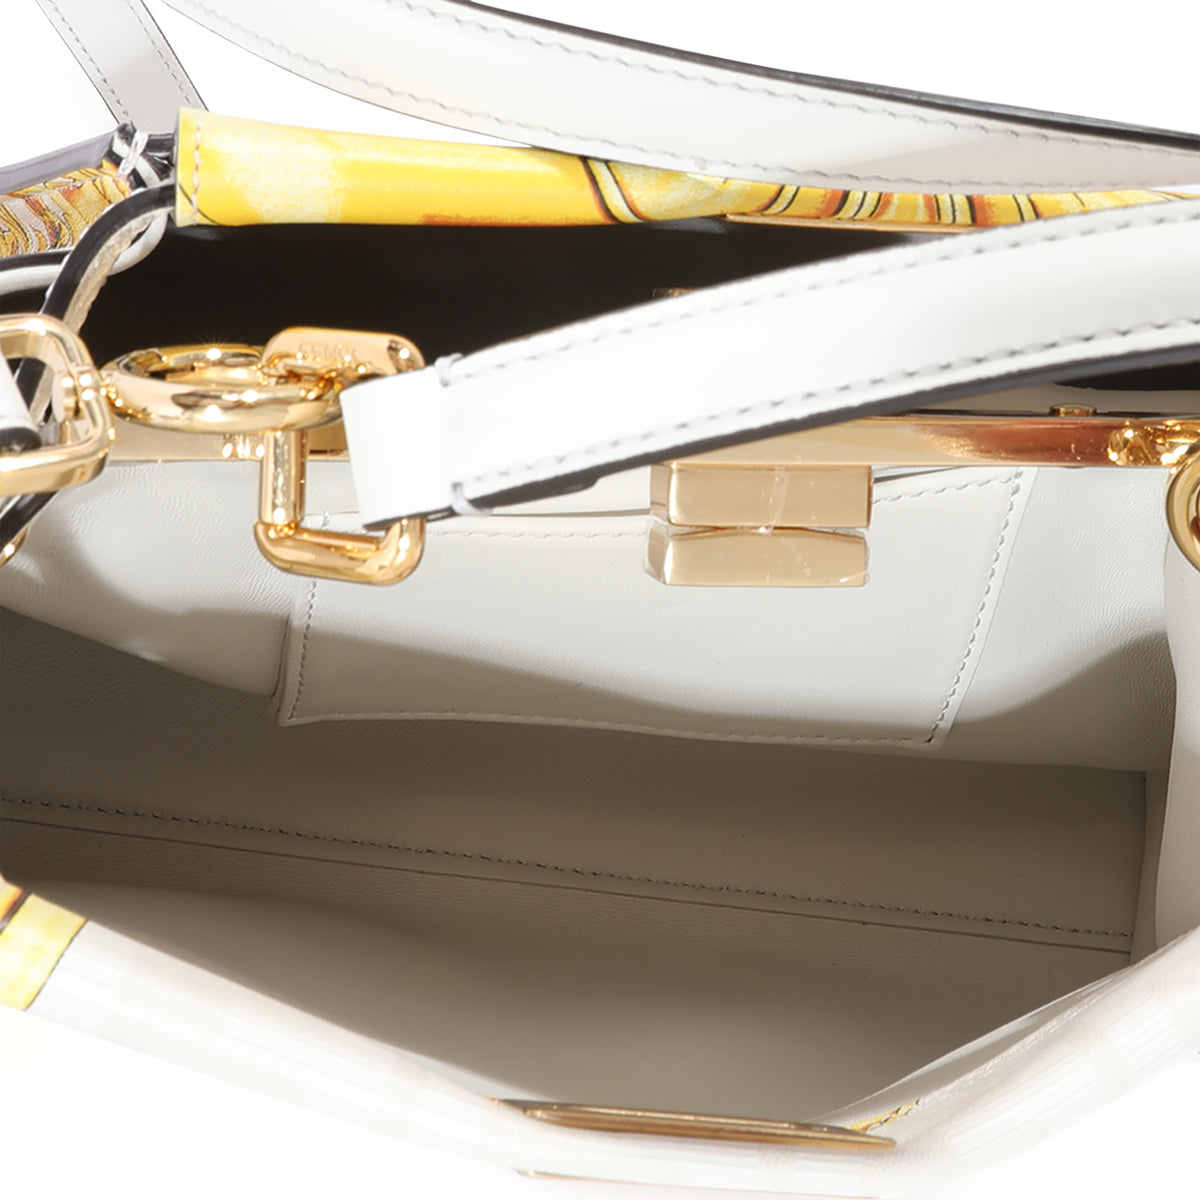 x Versace Fendace Gold Baroque & White FF Motif Mini Peekaboo